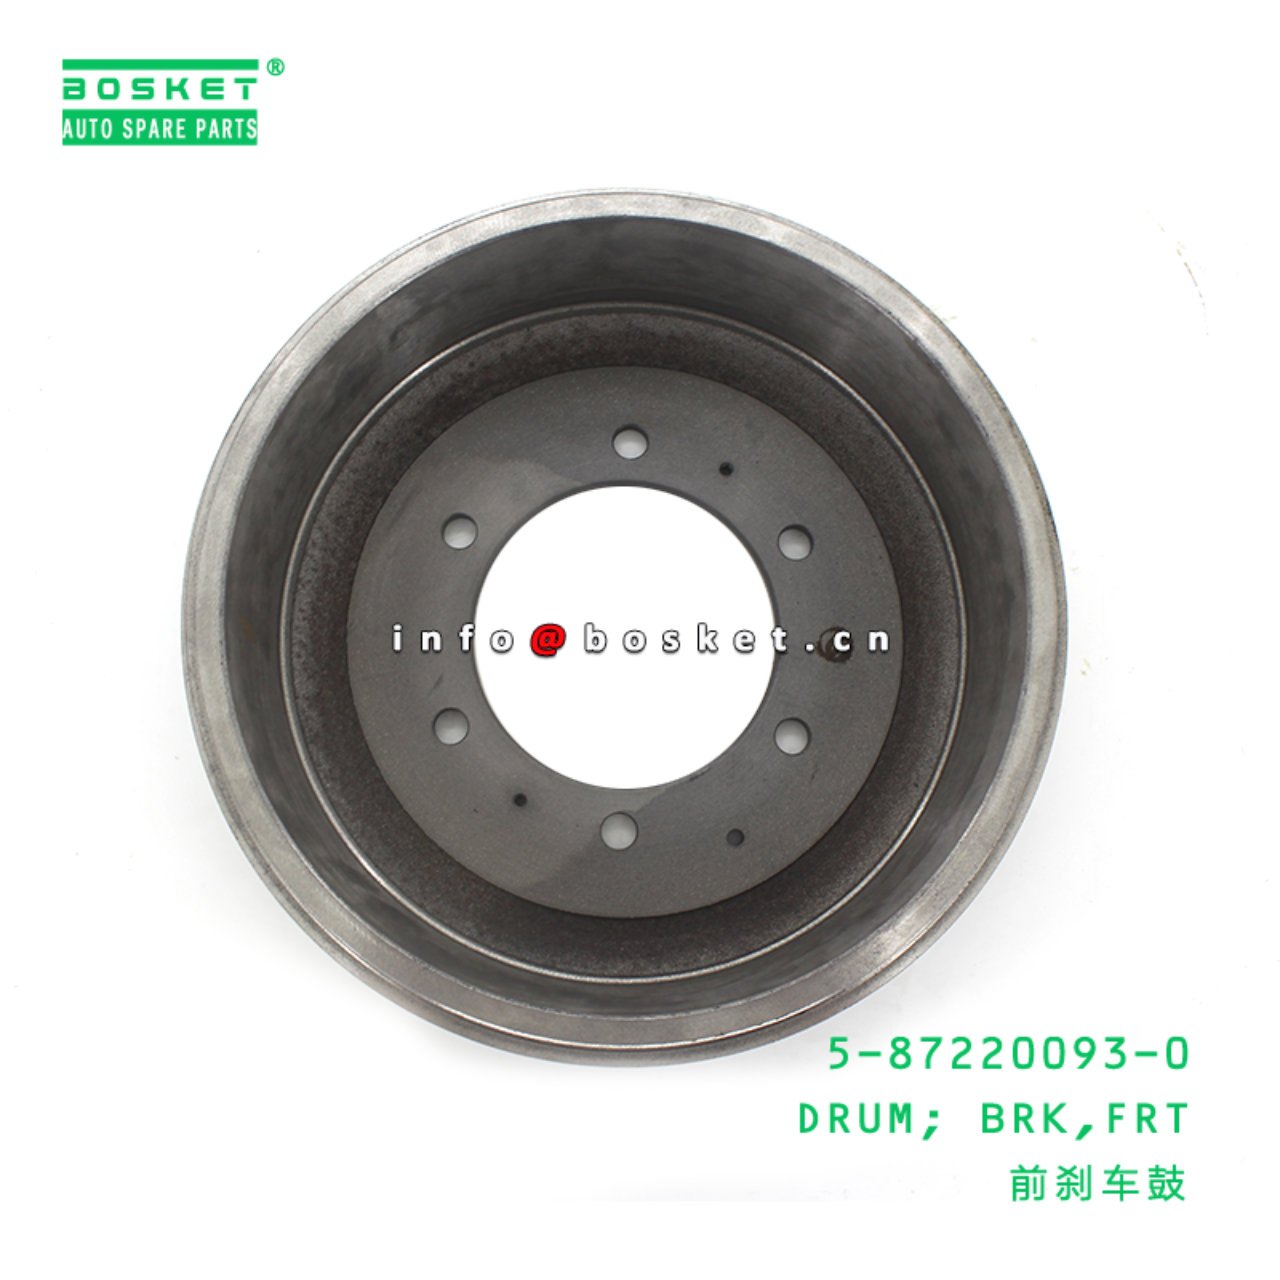  5-87220093-0 Front Brake Drum 5872200930 Suitable for ISUZU QKR-LHD